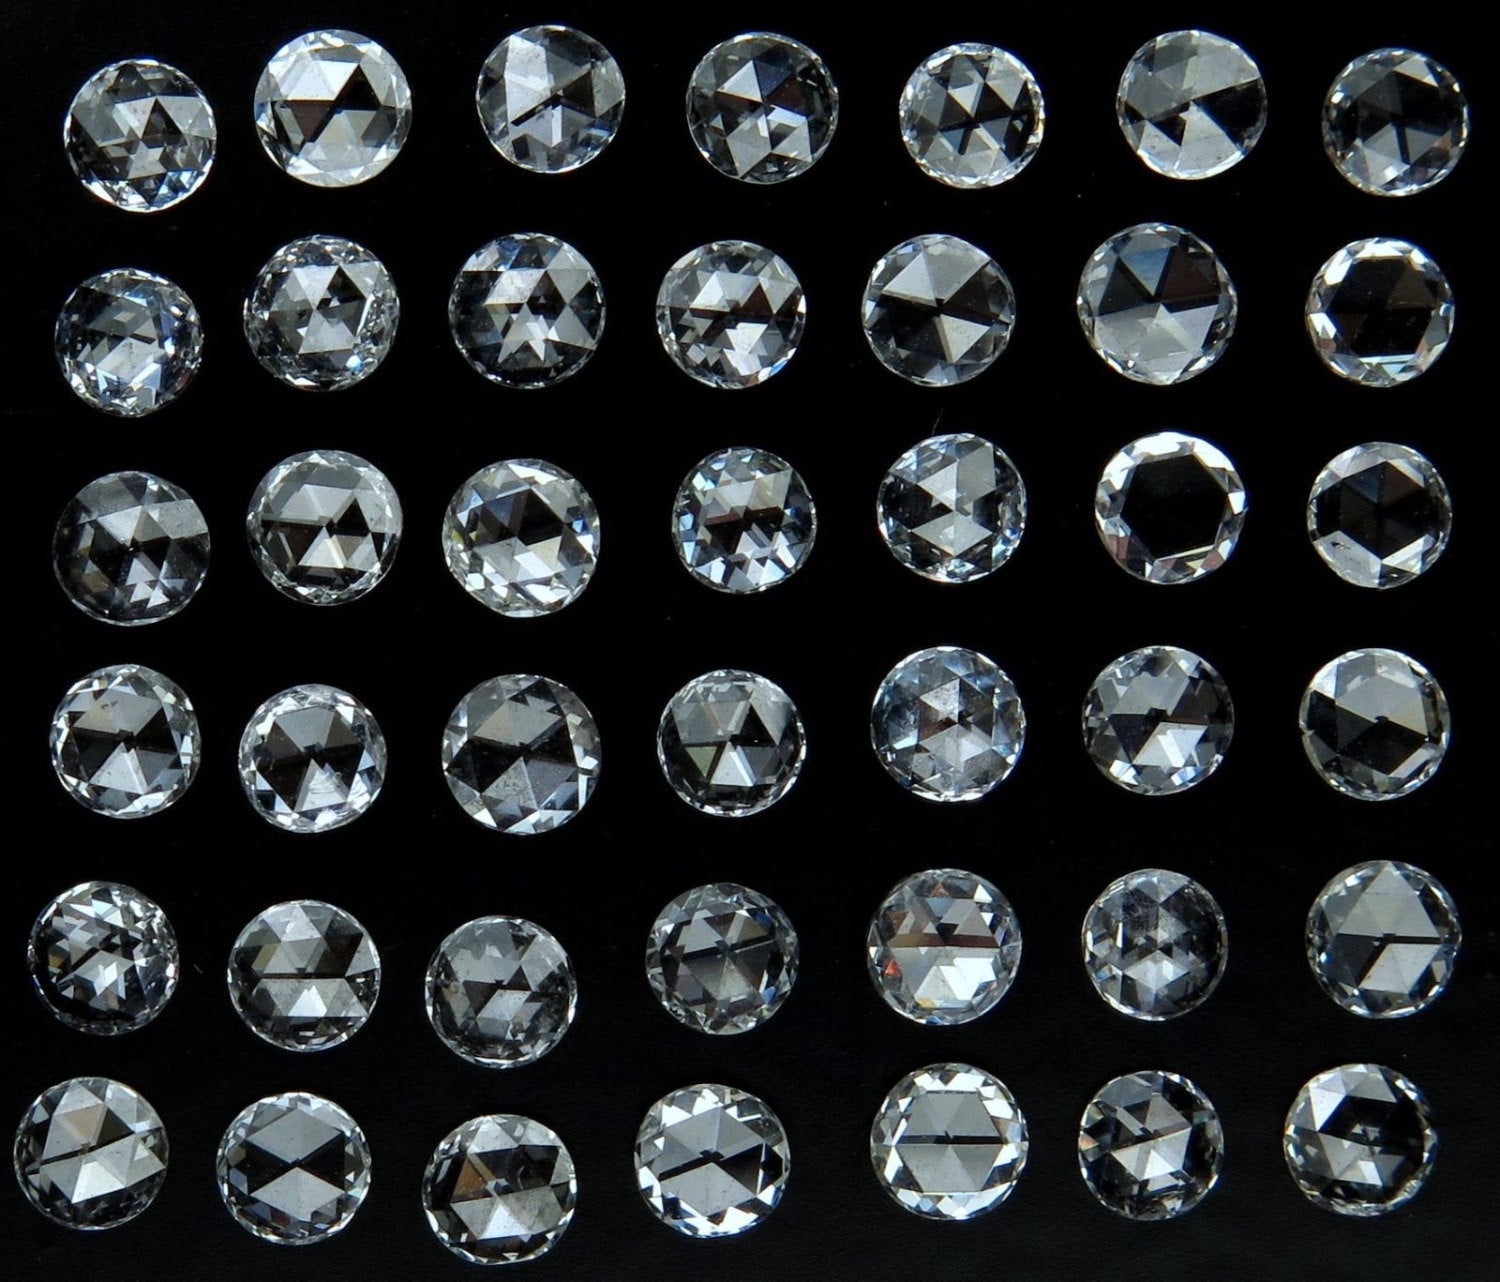 Natural Loose Diamond Round Rose Cut G H White Color VS1 VVS1 Clarity REAL Diamond 1.20 to 3.00 MM 1 pcs lot Q17